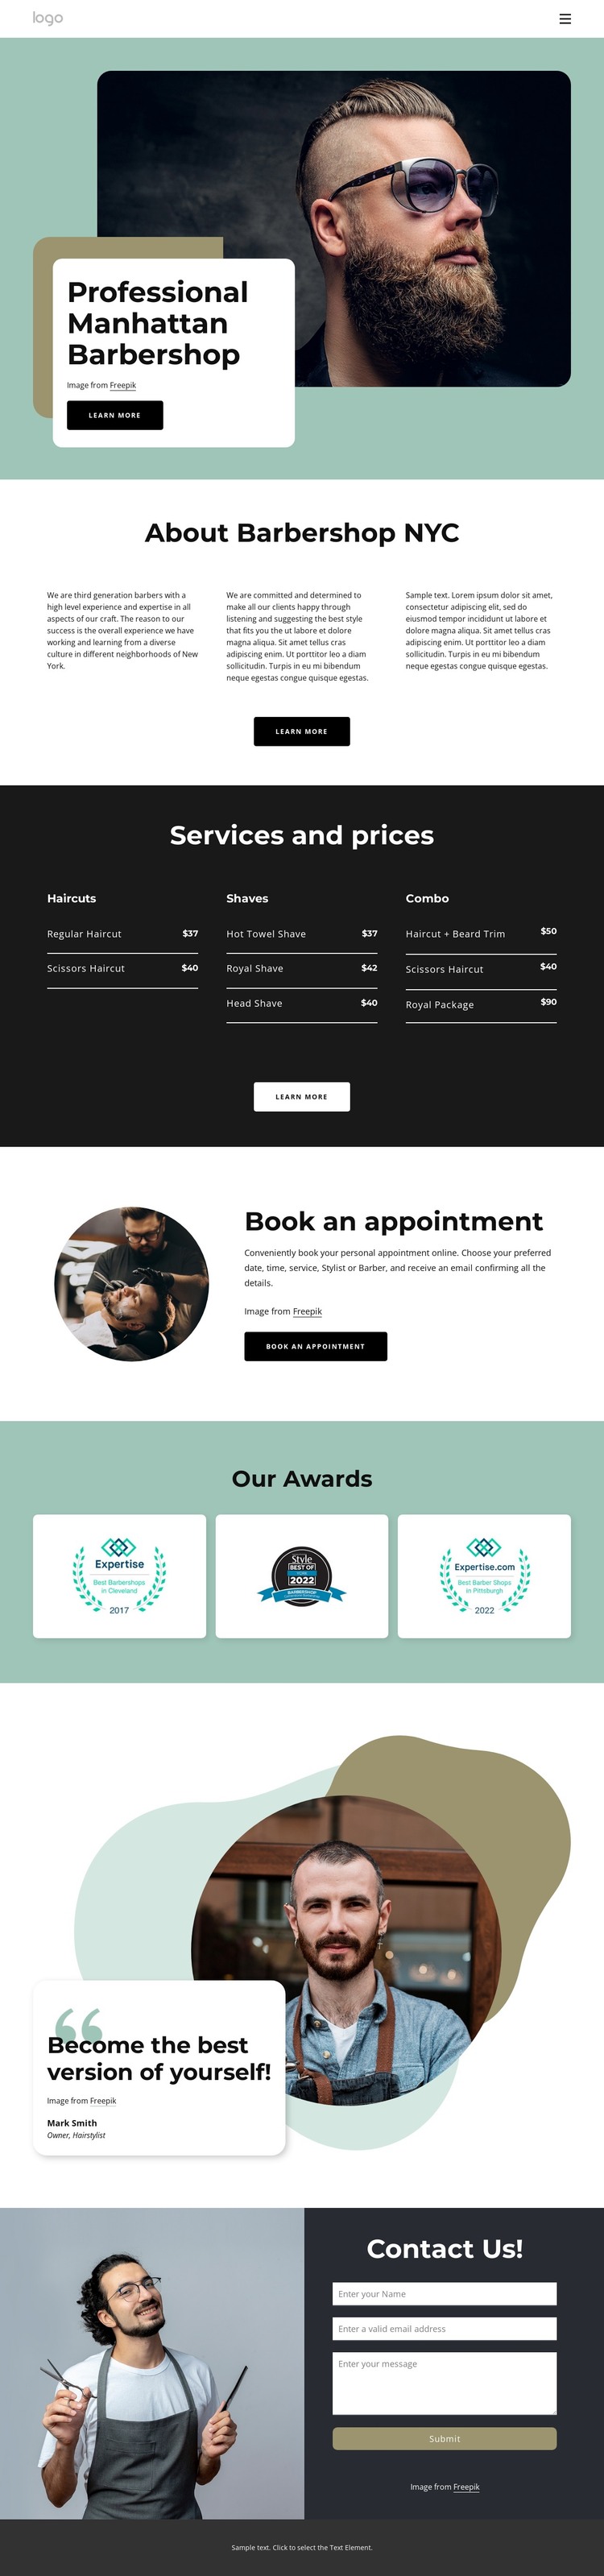 About Manhattan barbershop Web Design